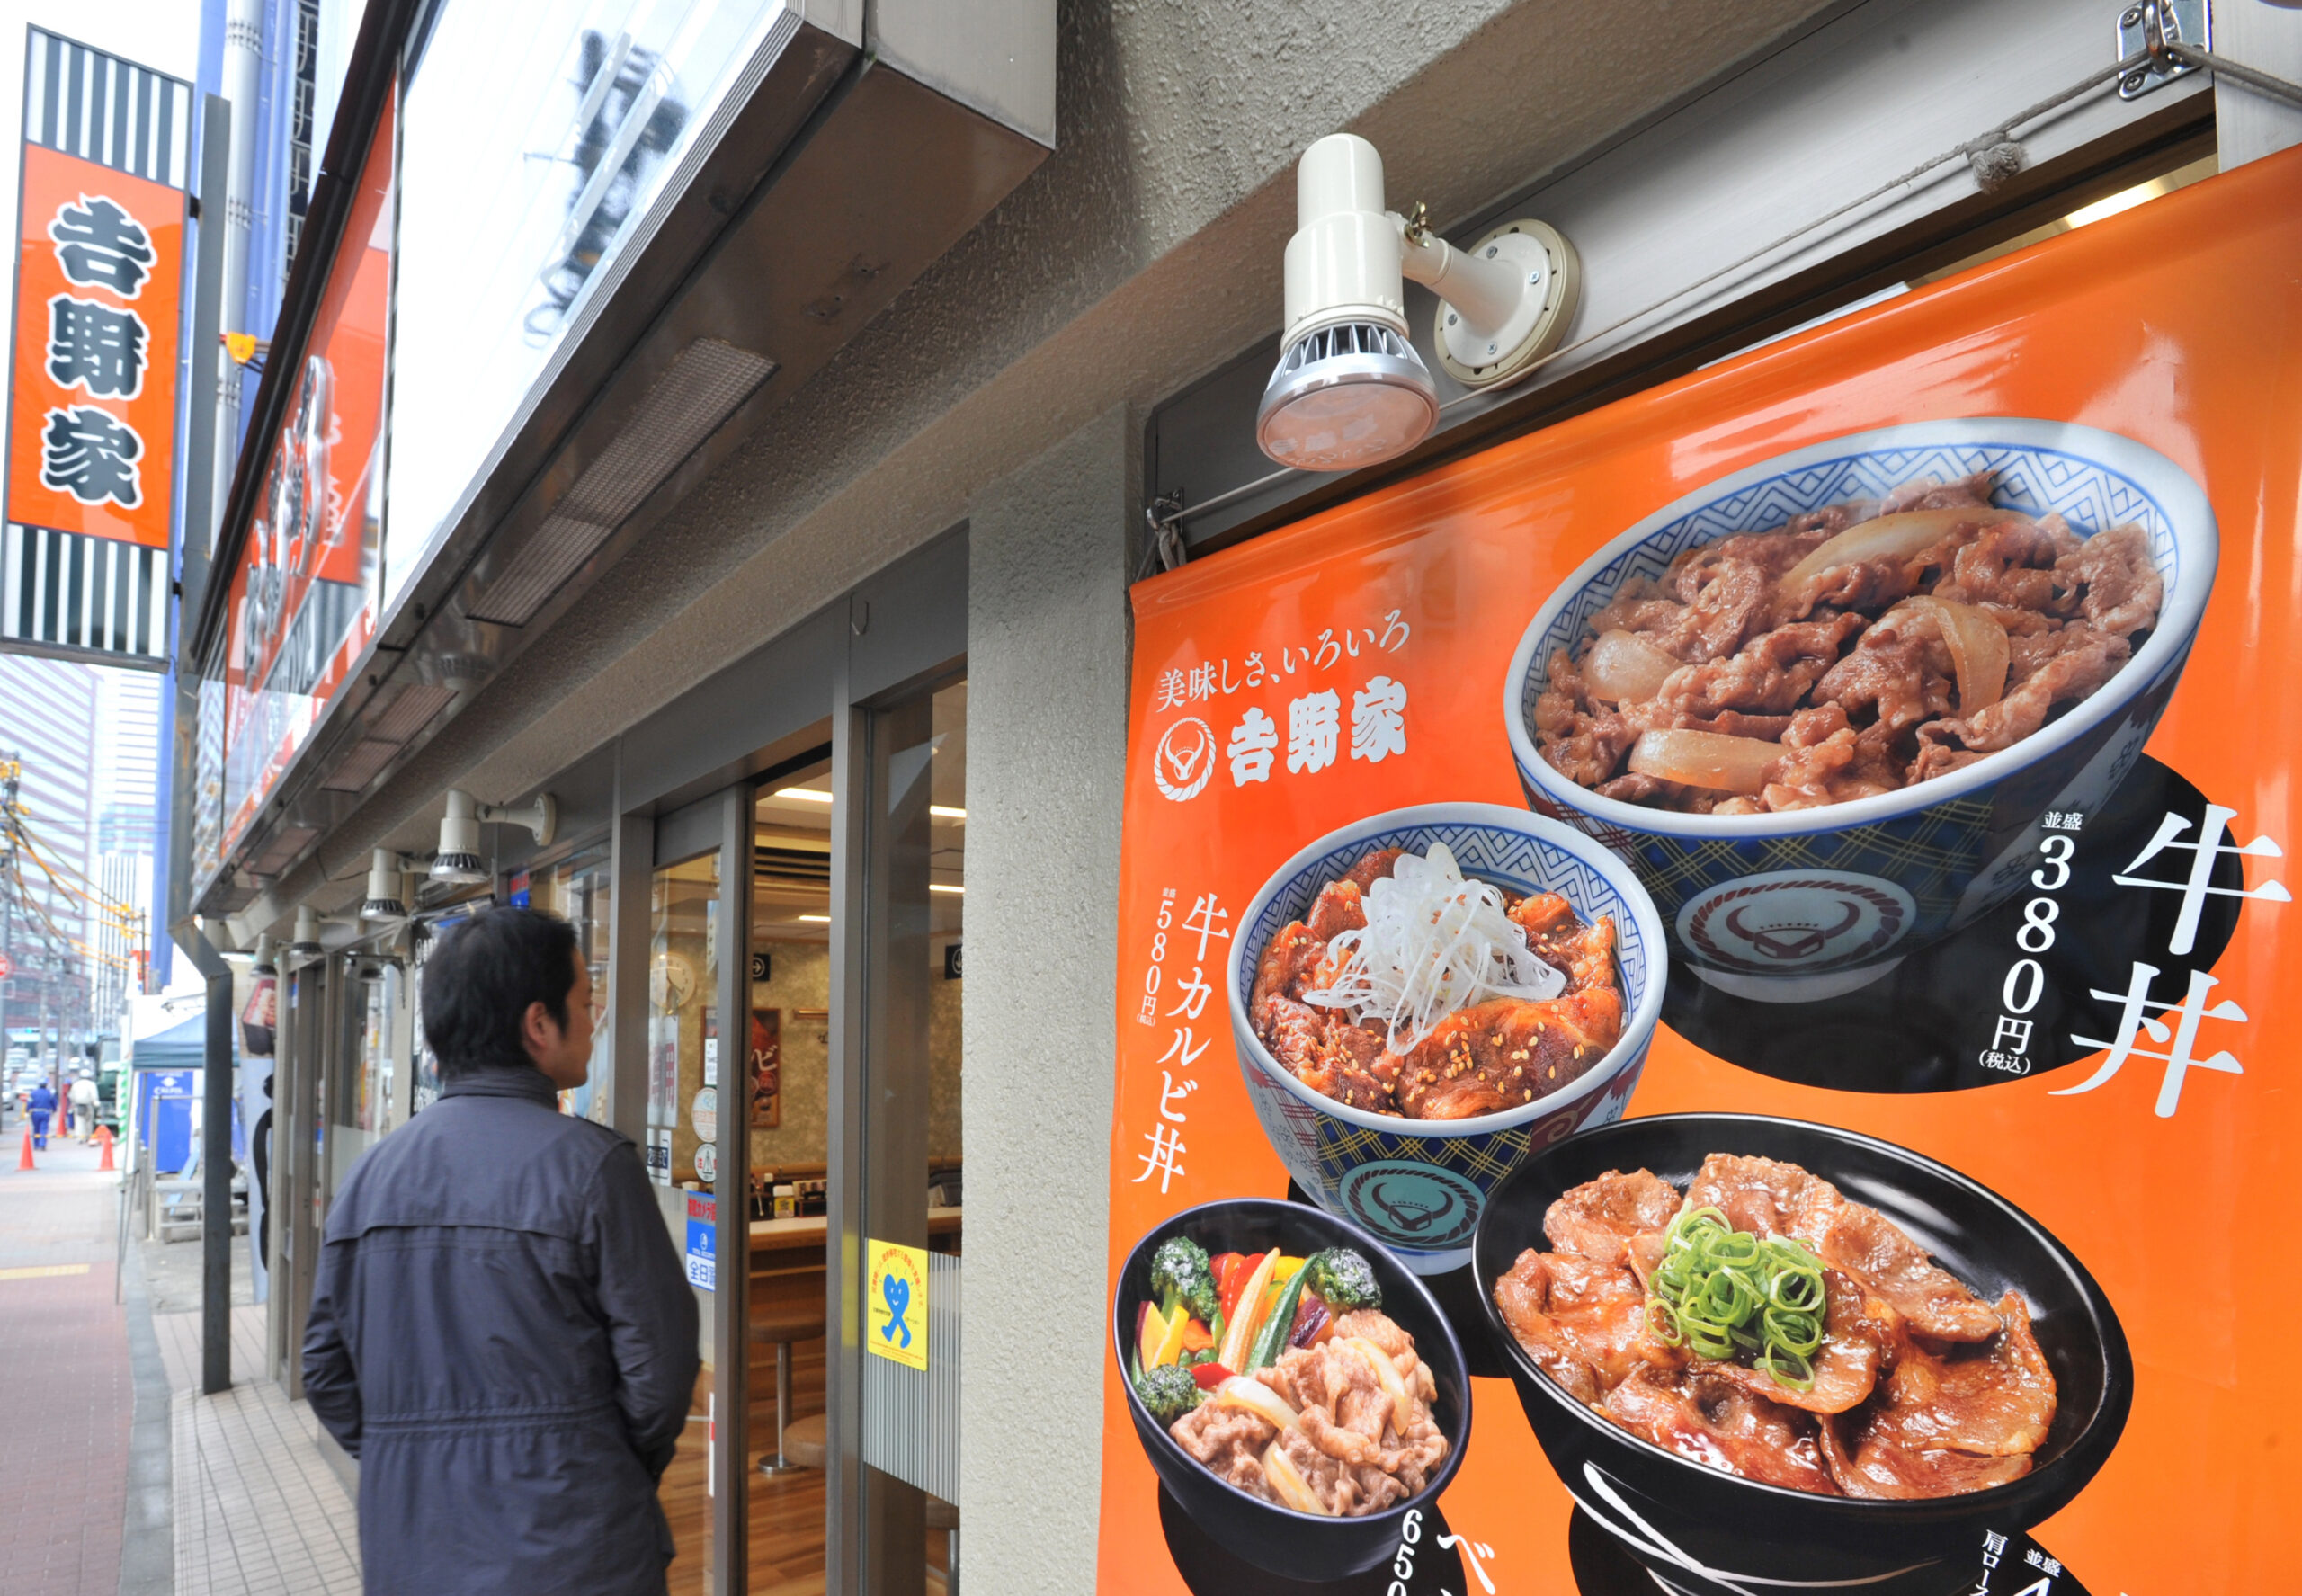 Yoshinoya: Indulging in Japan’s Culinary Temptations